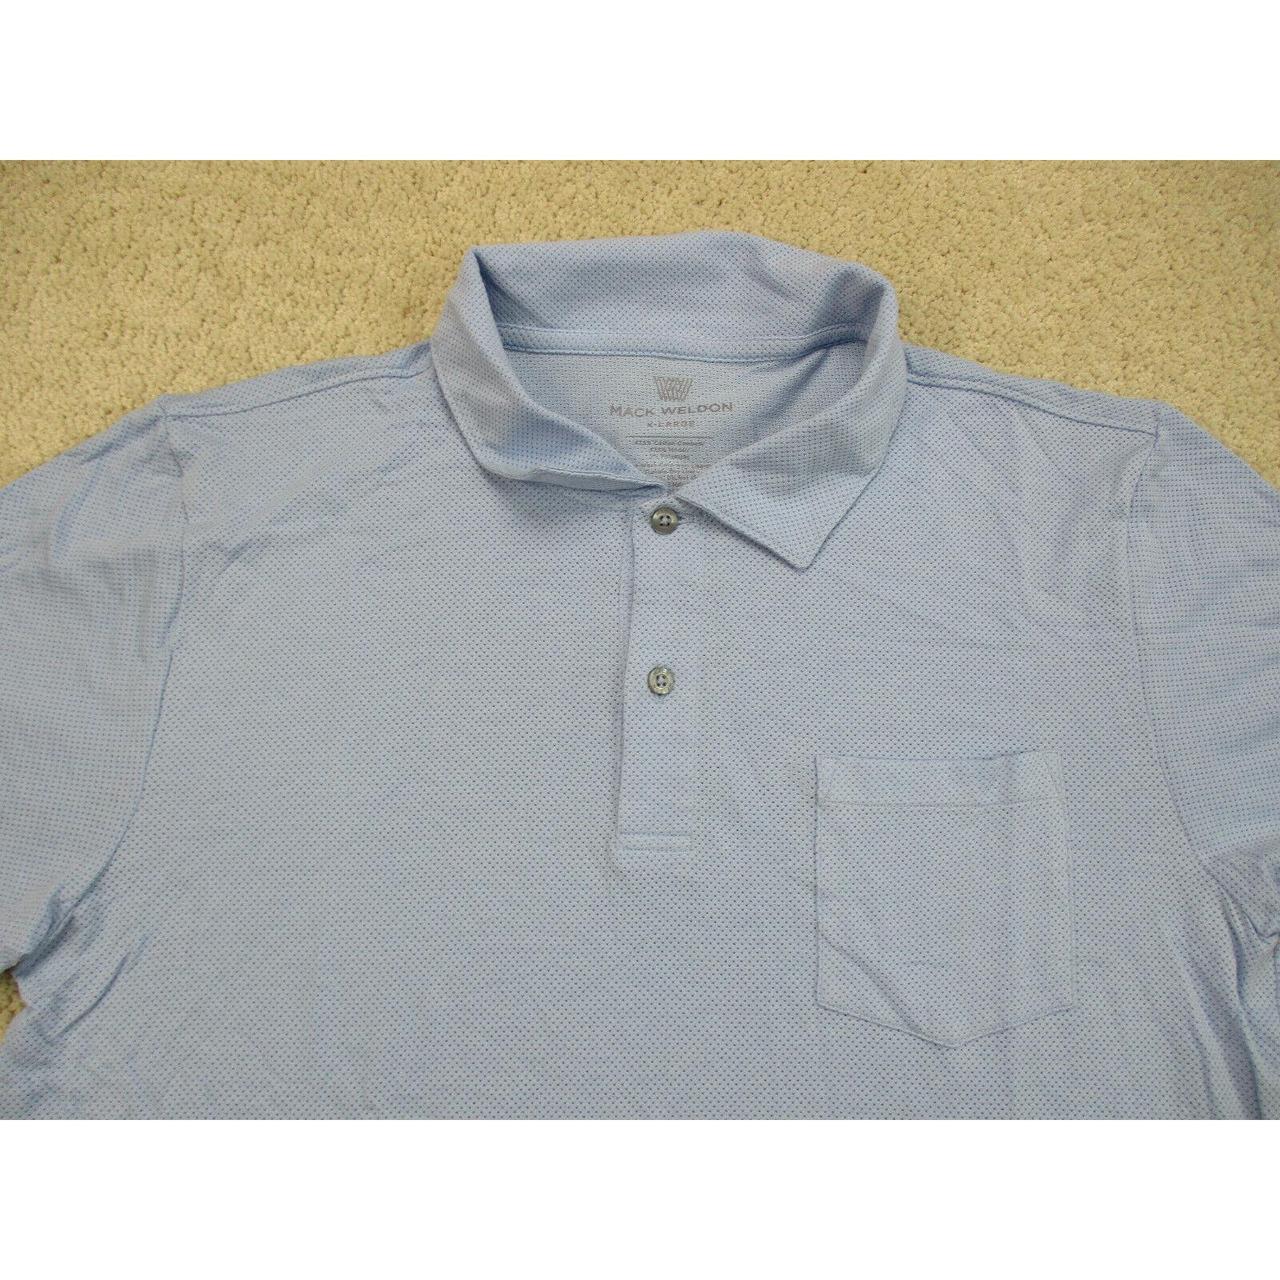 Product Image 3 - Mack Weldon Polo Shirt Adult